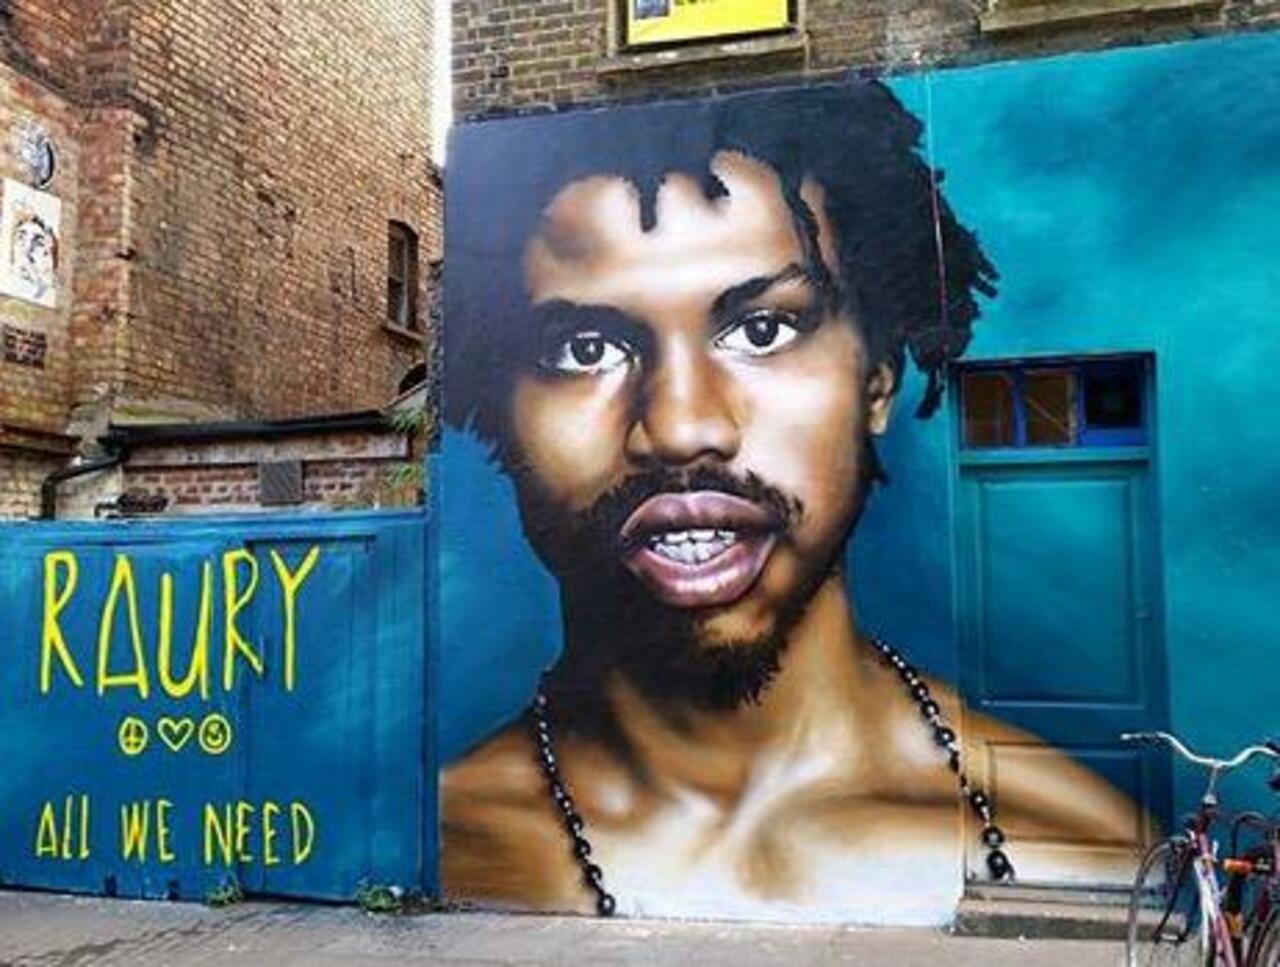 New Street Art of Raury by Olliver Switch in Brick Lane 

#art #graffiti #mural #streetart http://t.co/OTEKOpRbNt